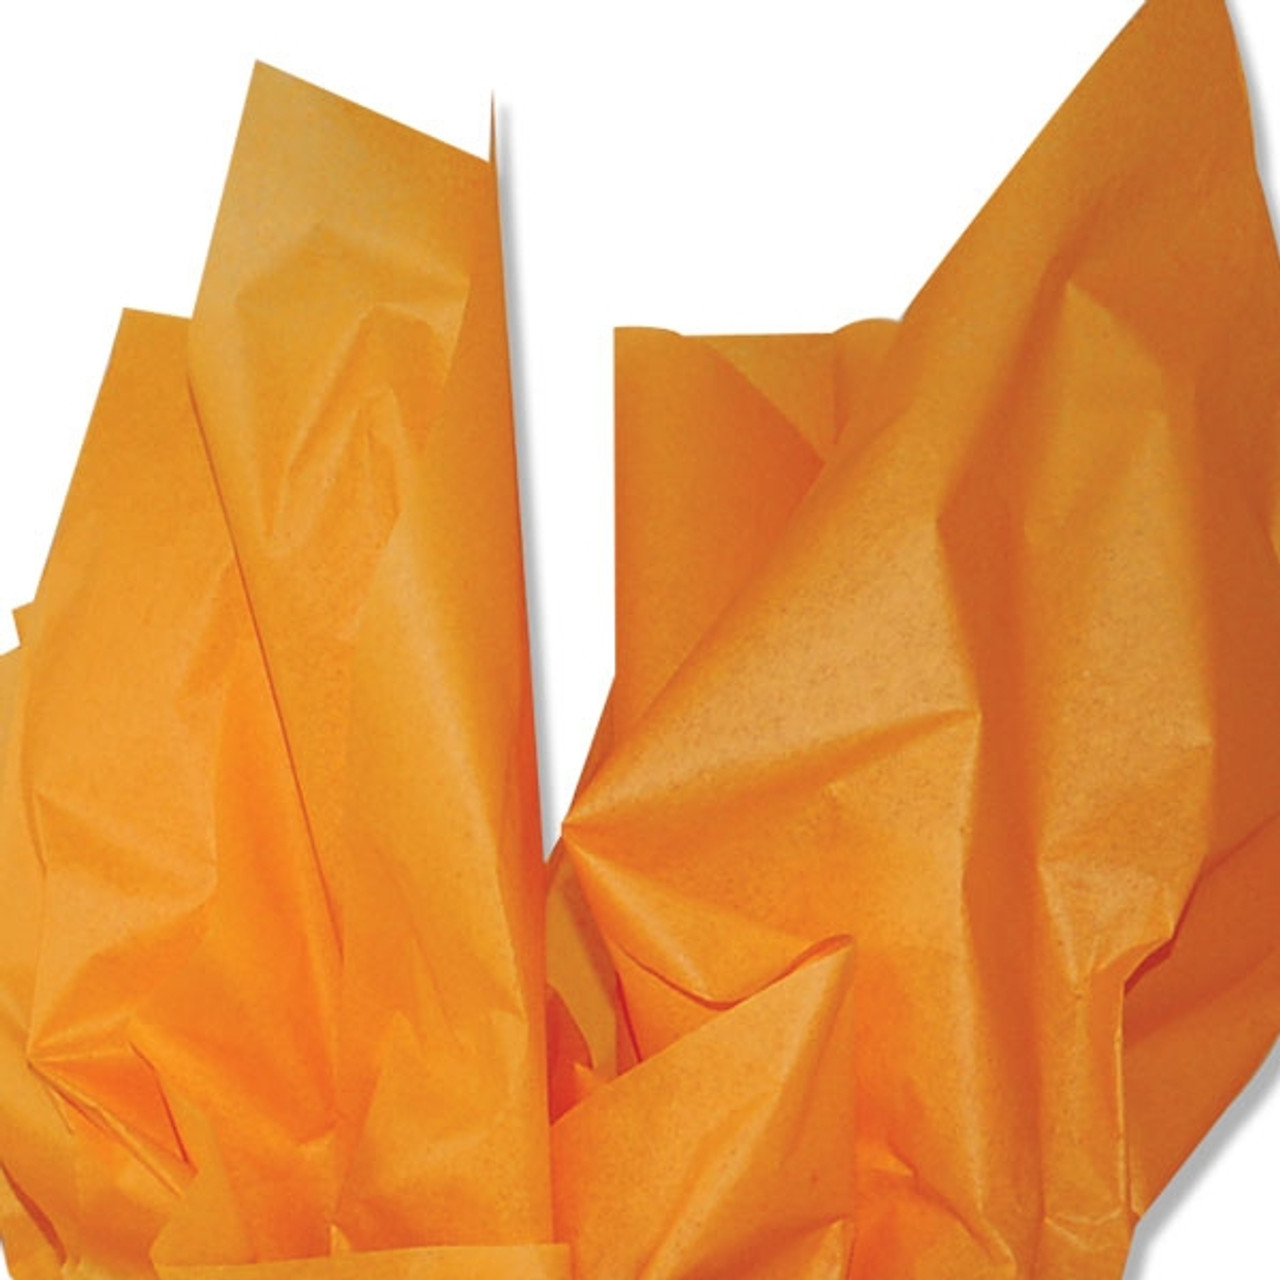 Colored Tissue Paper - Tangerine Orange - NE-195-480 Sheets per Ream